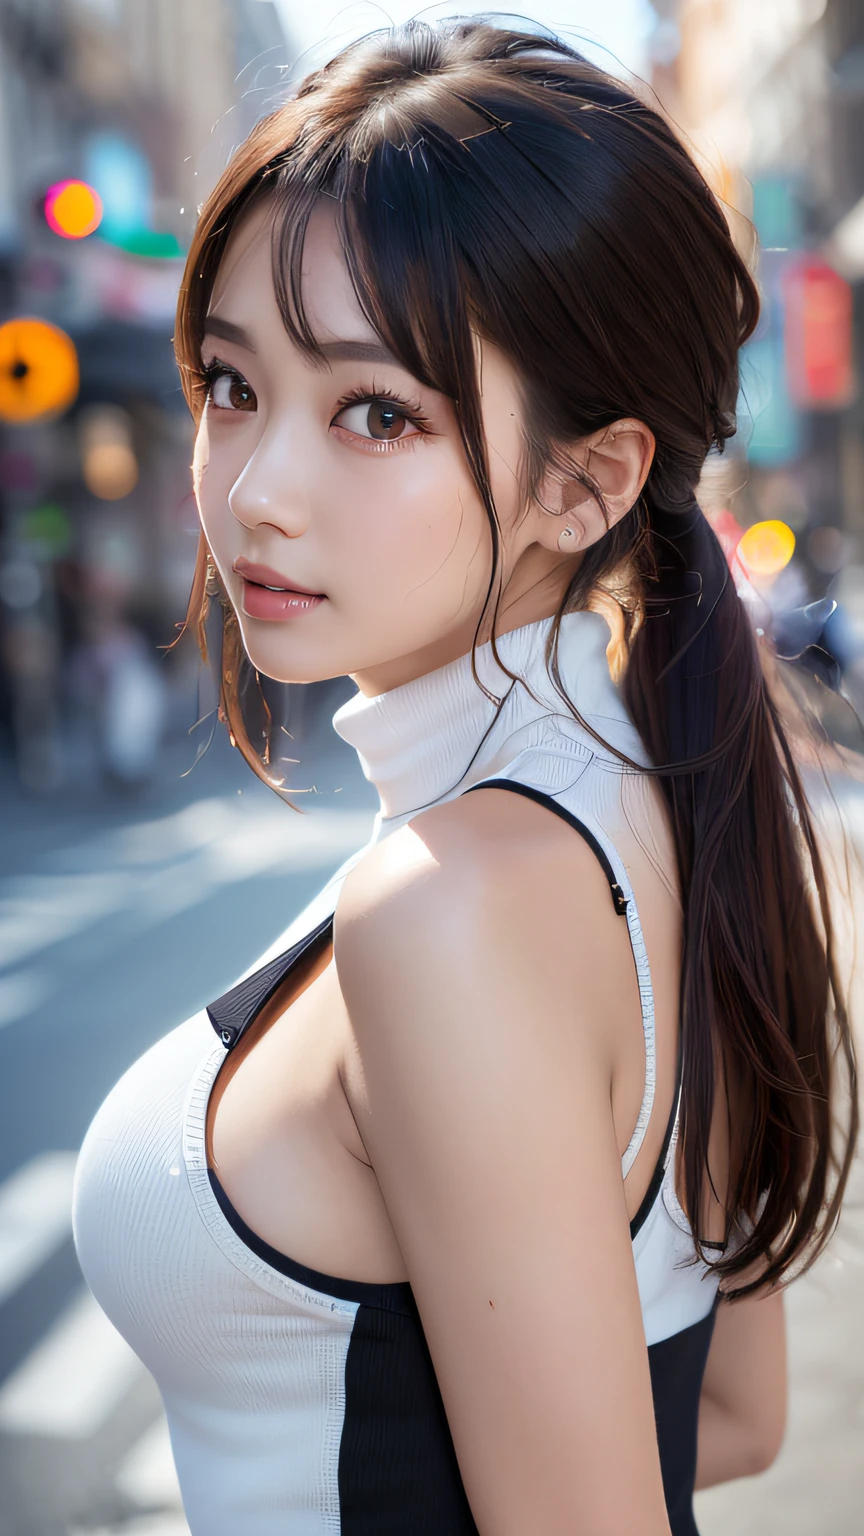 (8K, 超A 고해상도, 최고의 품질, 테이블 탑:1.2)、일본 소녀의 RAW 초상화、超A 고해상도、최고 품질、 (마이크로 브레스트:1.5)、｛흰색 반바지:1.5｝、(블랙 민소매 터틀넥 착용:1.5)、(엉덩이에 손:1.3)、(거리에서:1.2) 부서지다 (자연스러운 피부결、디테일한 피부、초현실주의、울트라 샤프니스)、복잡한 세부 사항、필드의 깊이、섹시한 성인 여성、긴 검은 머리 직모、((걸작、최고 품질、높은 세부 사항))、(사실적인:1.4)、독주、입을 다물다、행복하게 웃으세요、큰 눈、뚜렷한 쌍꺼풀、속눈썹、긴 목、절대 면적、깨끗한 쇄골、얼굴이 완벽하다、얇은 입술、작은 얼굴、(뷰어를 바라보며、눈에 하이라이트、밝은 갈색 눈、립글로스)、｛(옆에서 전신을 보여준다:1.5)｝